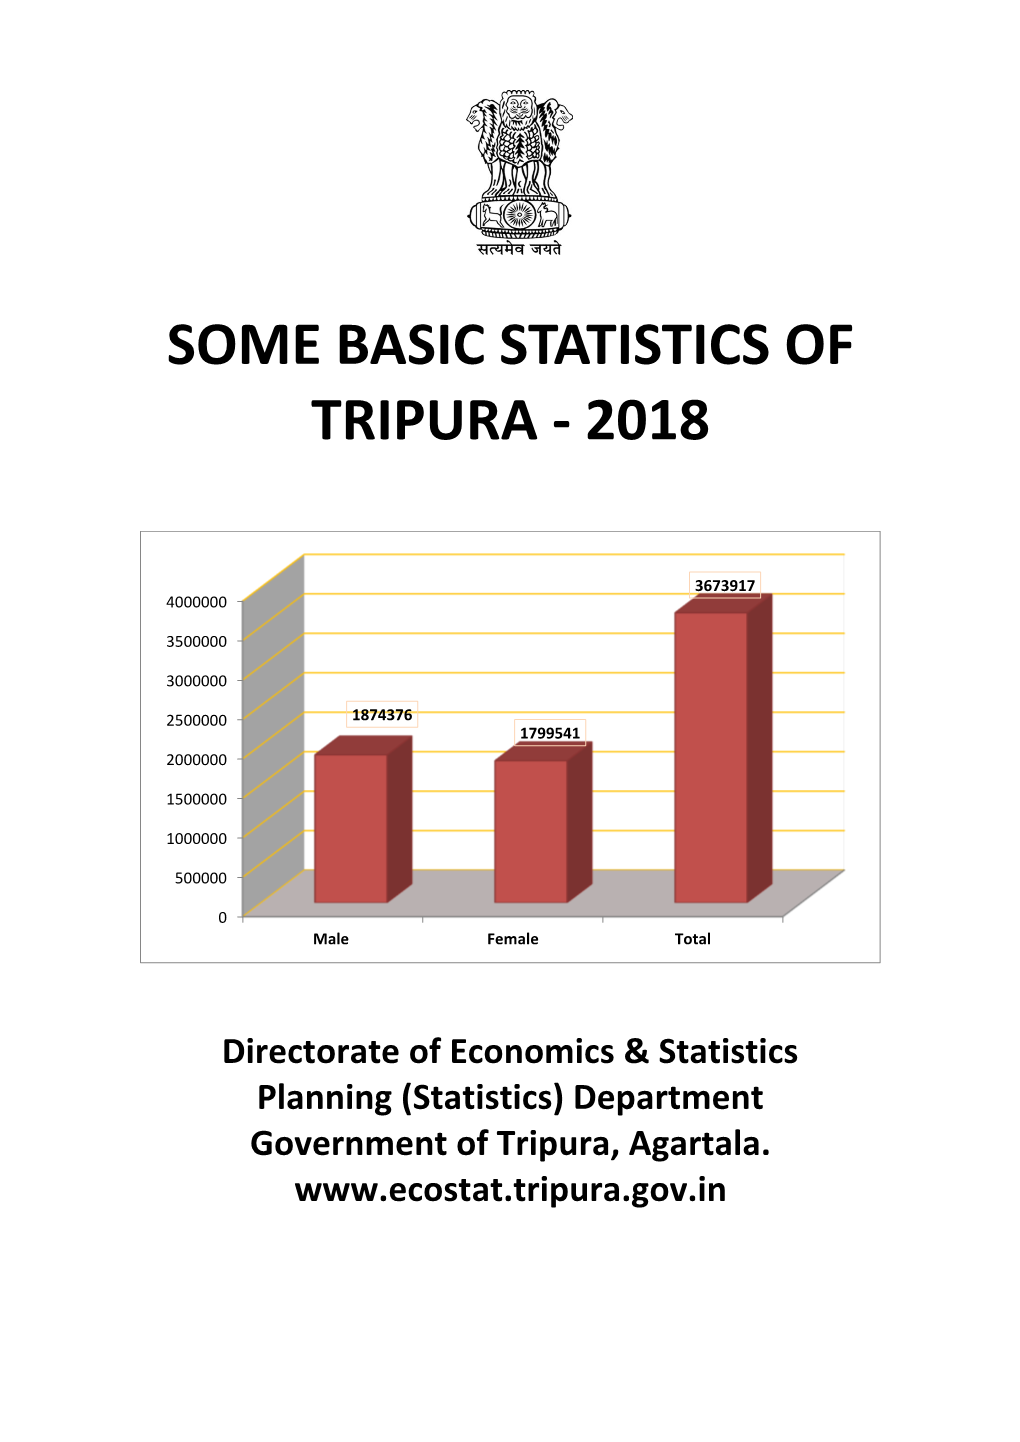 Some Basic Statistics of Tripura